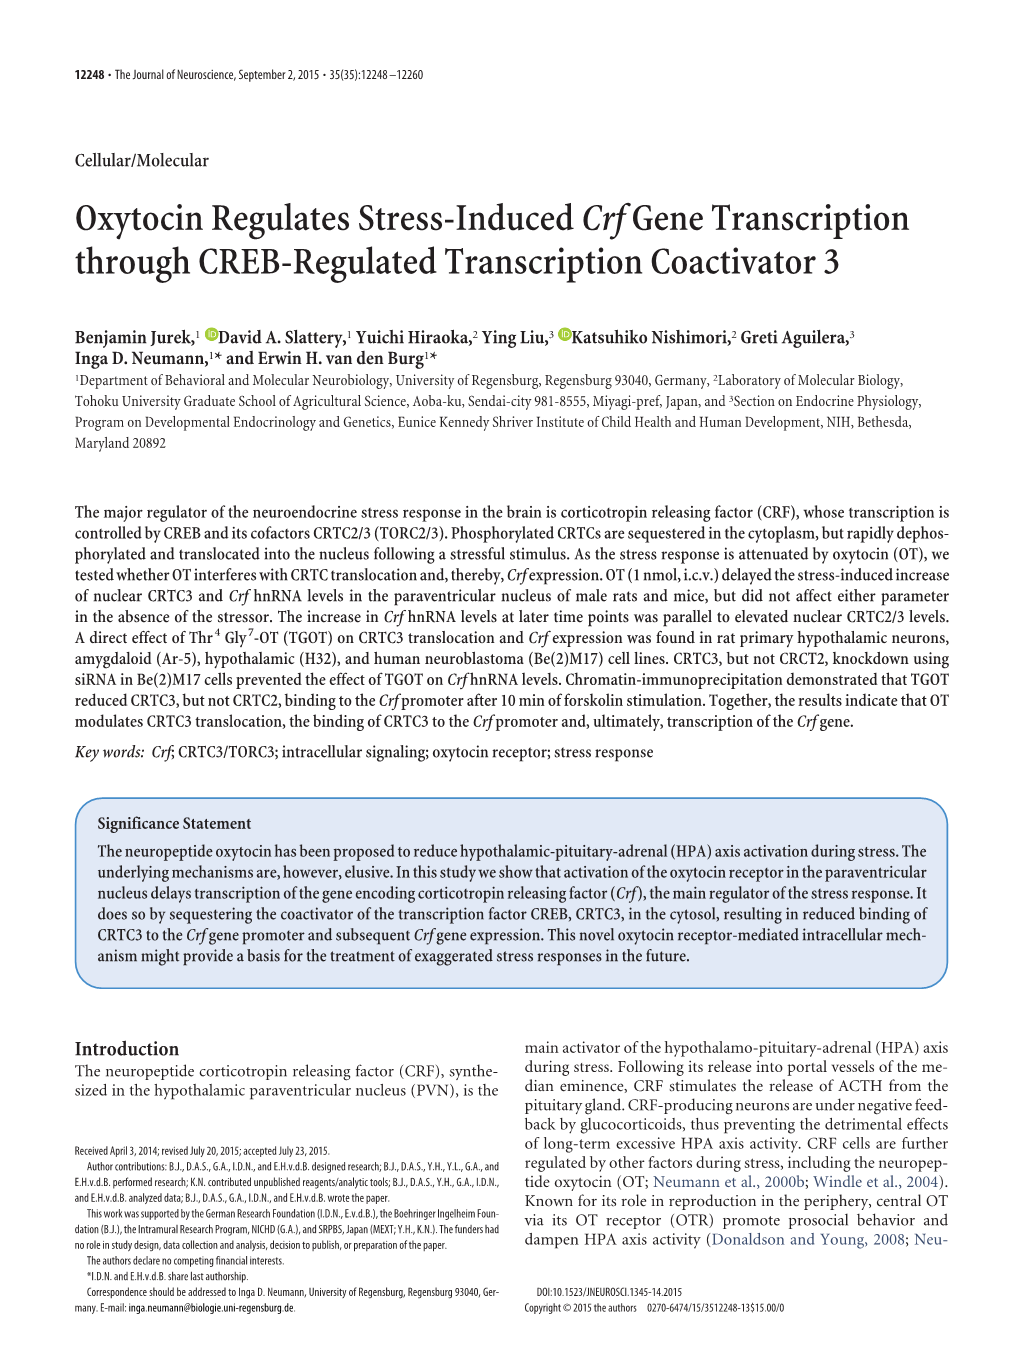 Oxytocin Regulates Stress-Inducedcrfgene